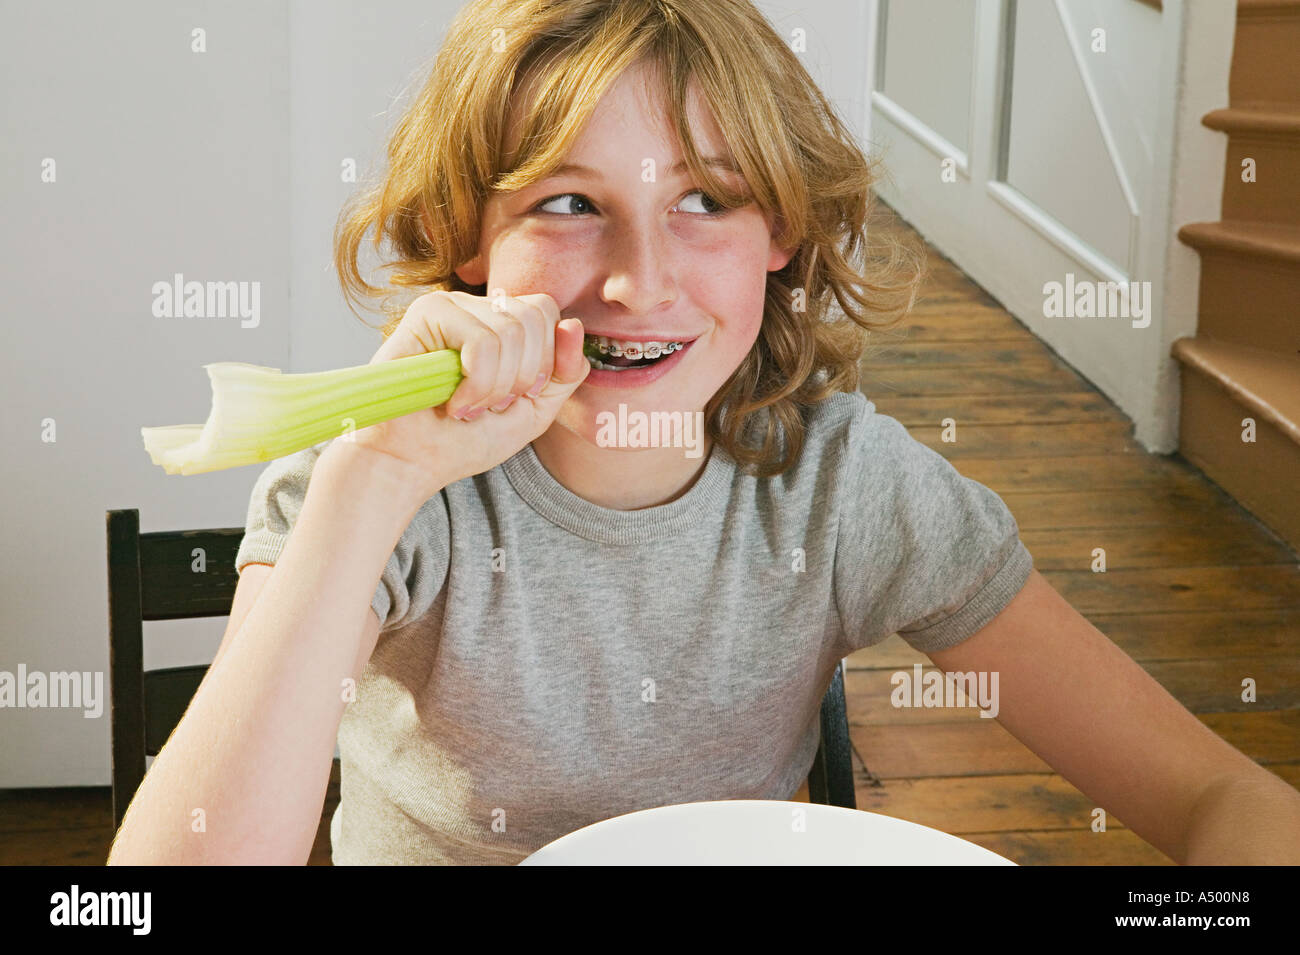 Girl biting a celery stick Stock Photo